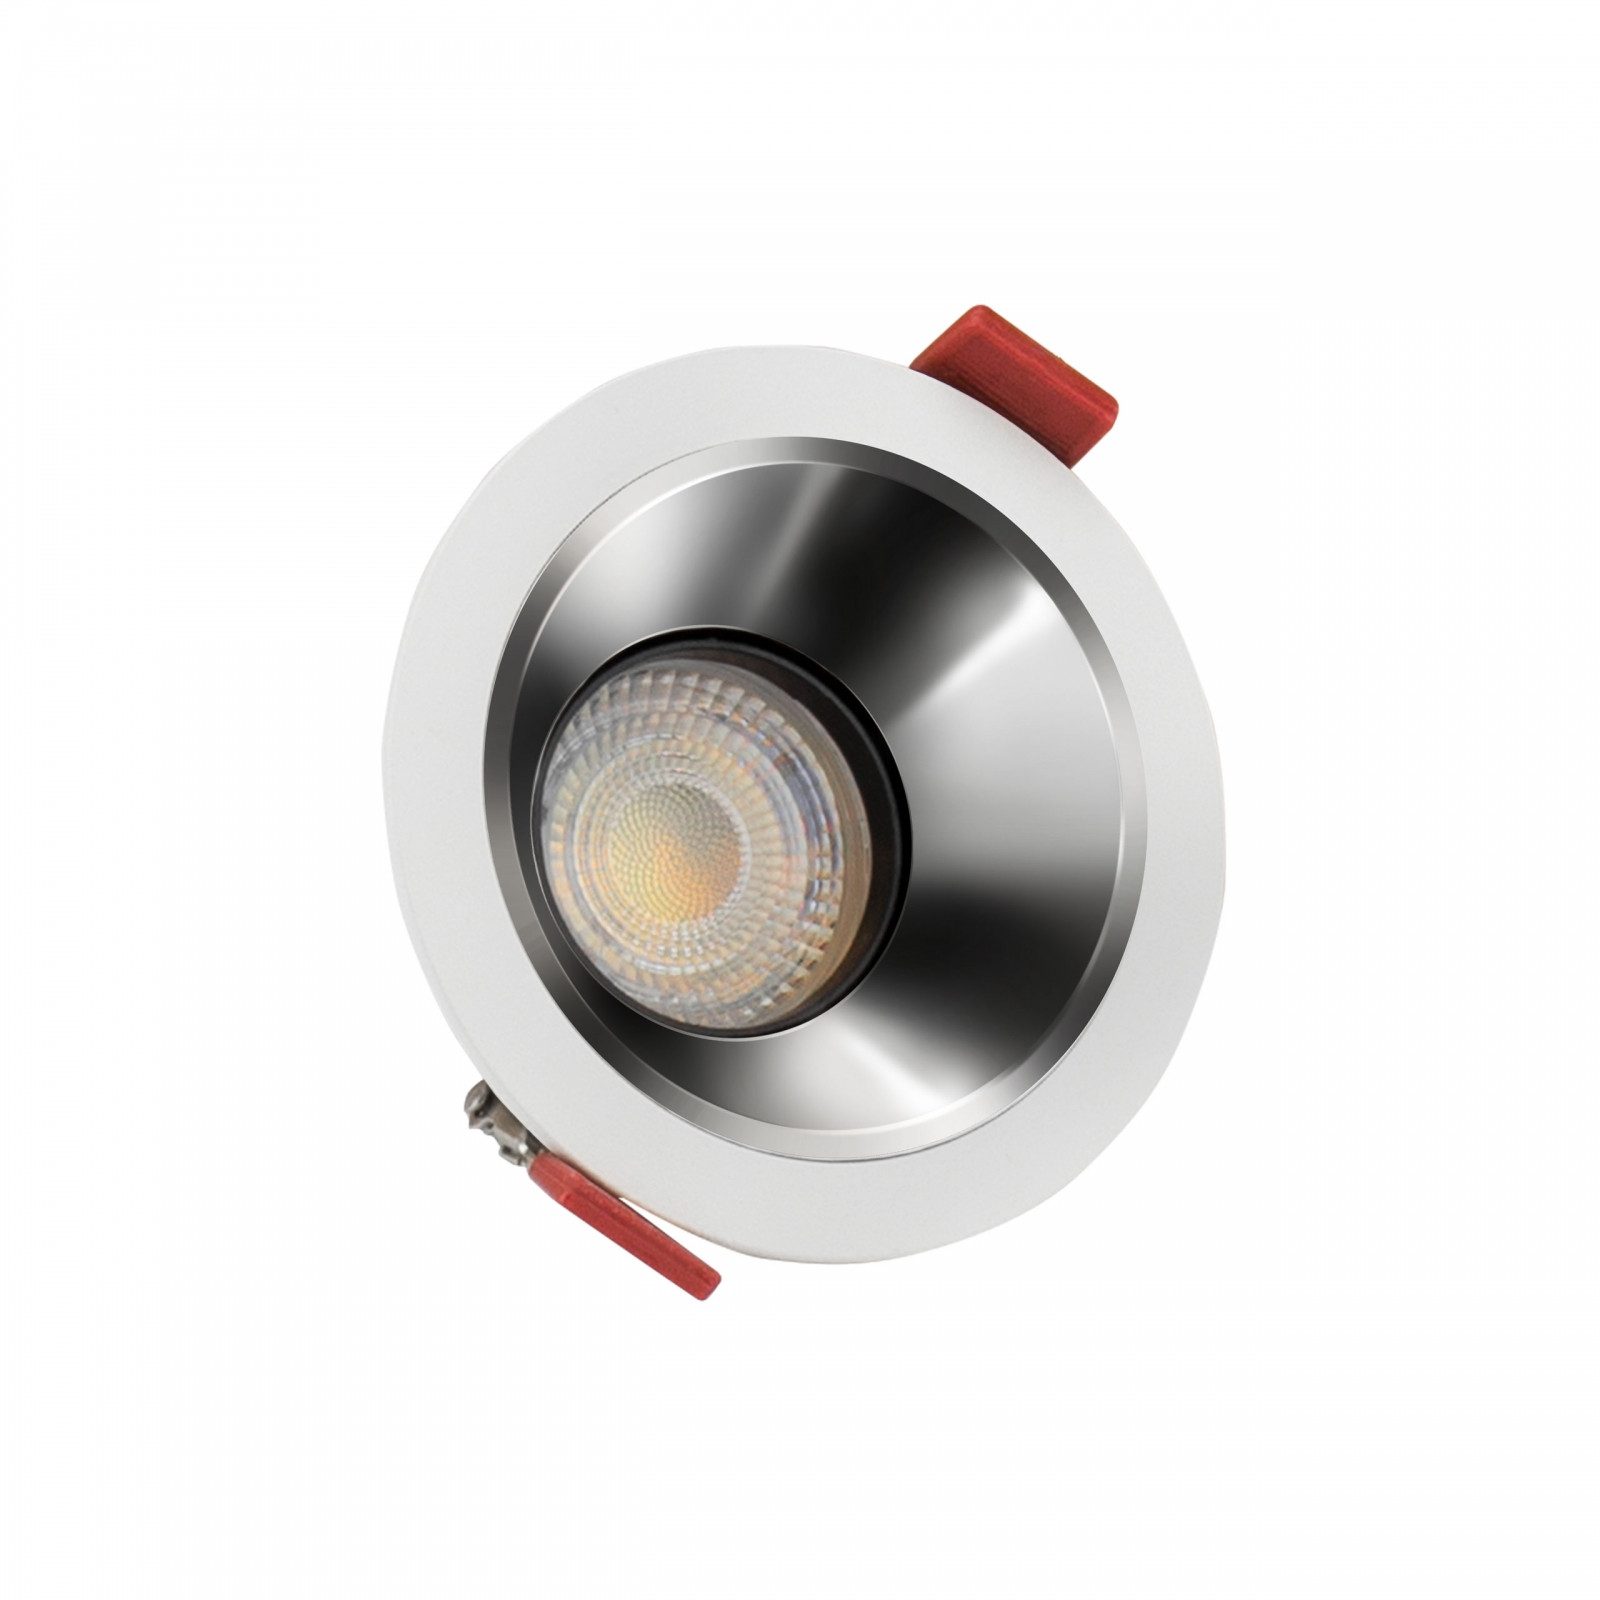 spectrum LED LED Einbaustrahler GU10 Einbaustrahler Downlight IP20 max.10W schwenkbar blendfrei weiß, schwenkbar, blendfrei